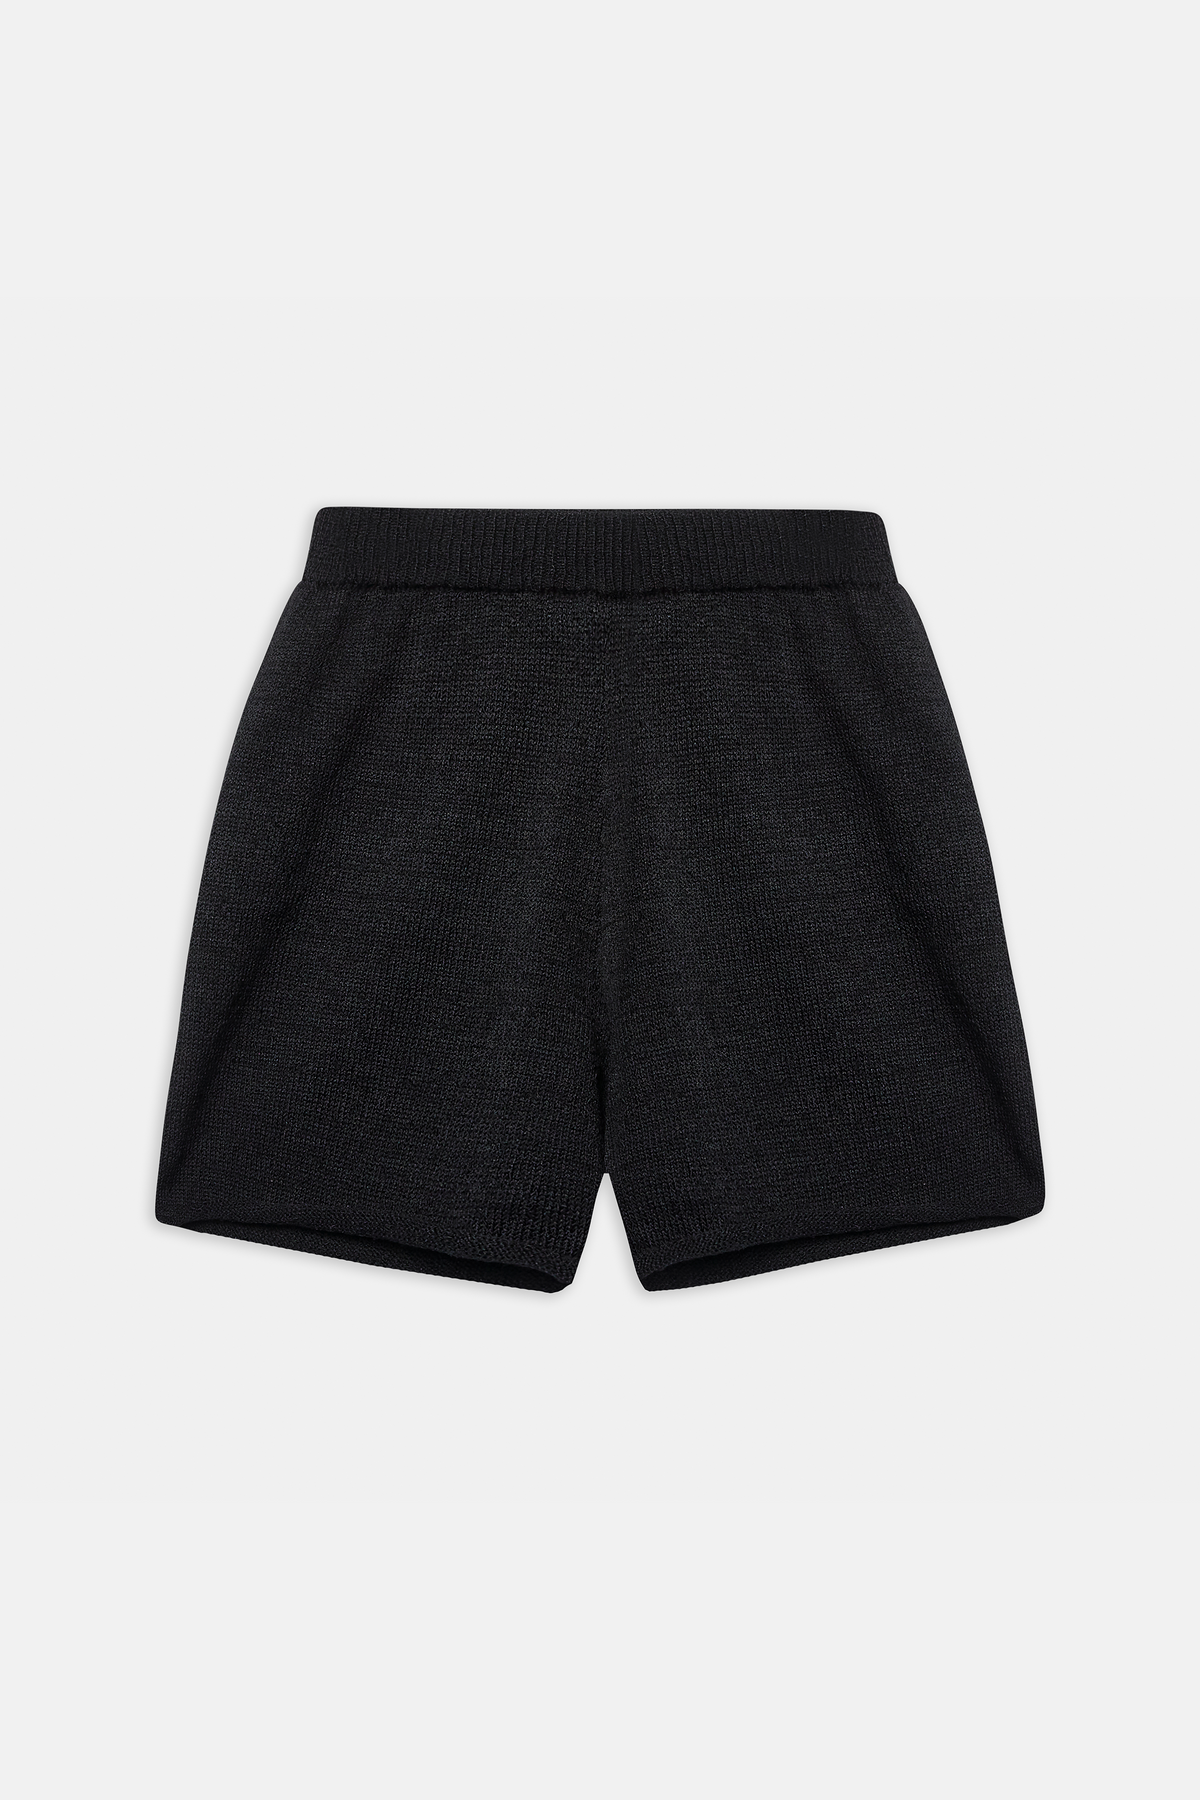 Crochet Knit Shorts - Black